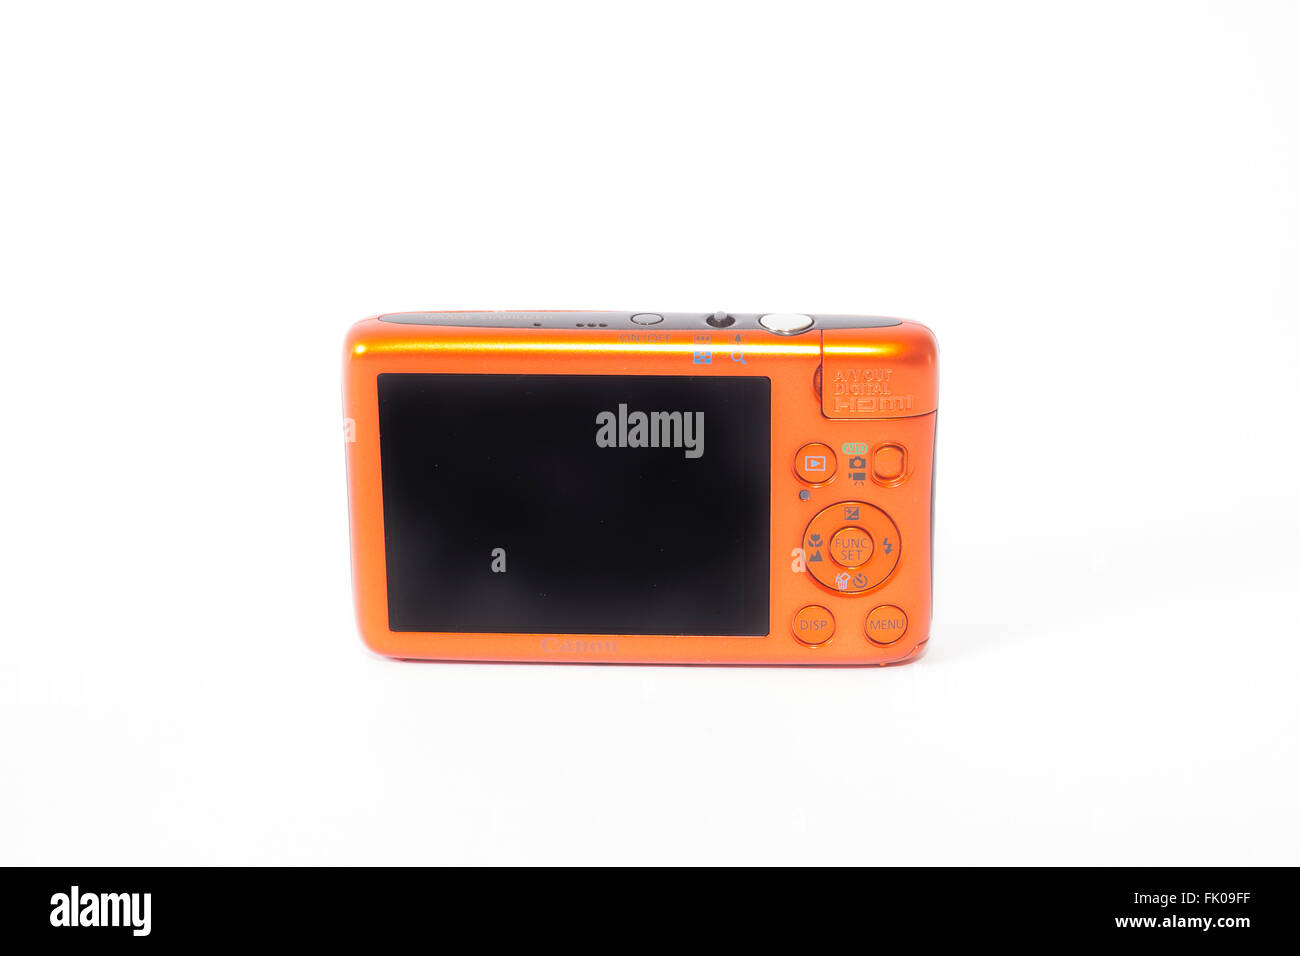 London, UK. Canon Ixus 130 compact digital camera in orange. Stock Photo